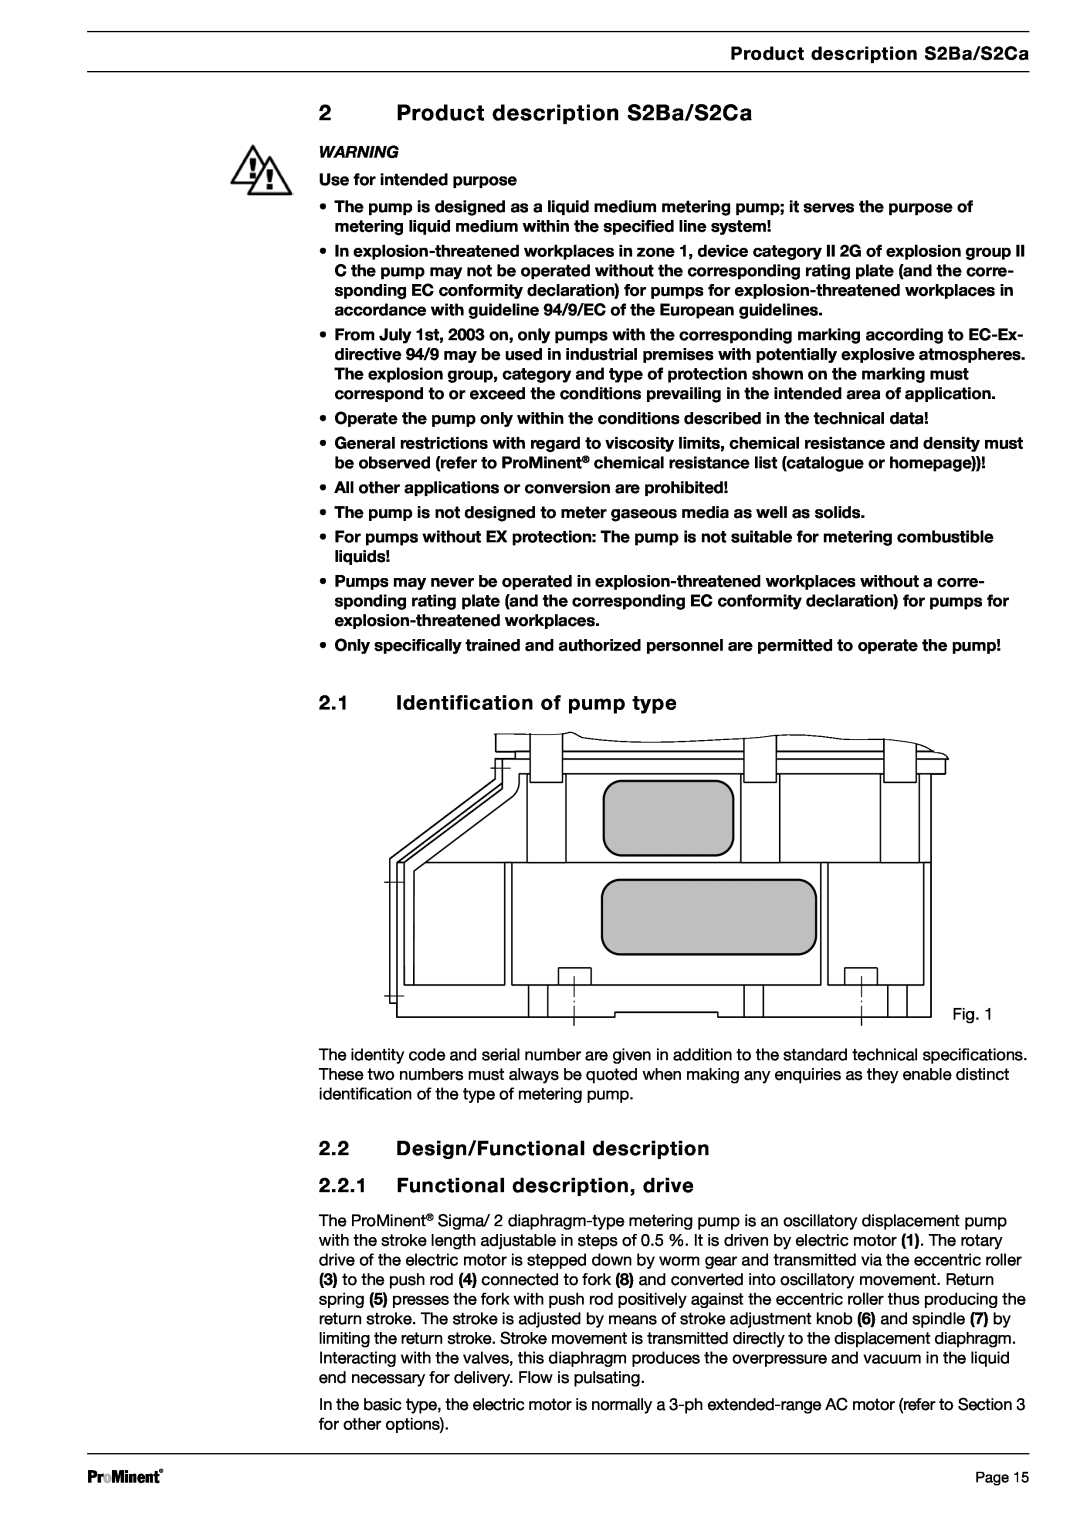 Sigma warranty 2Product description S2Ba/S2Ca, 2.1Identification of pump type, 2.2Design/Functional description 